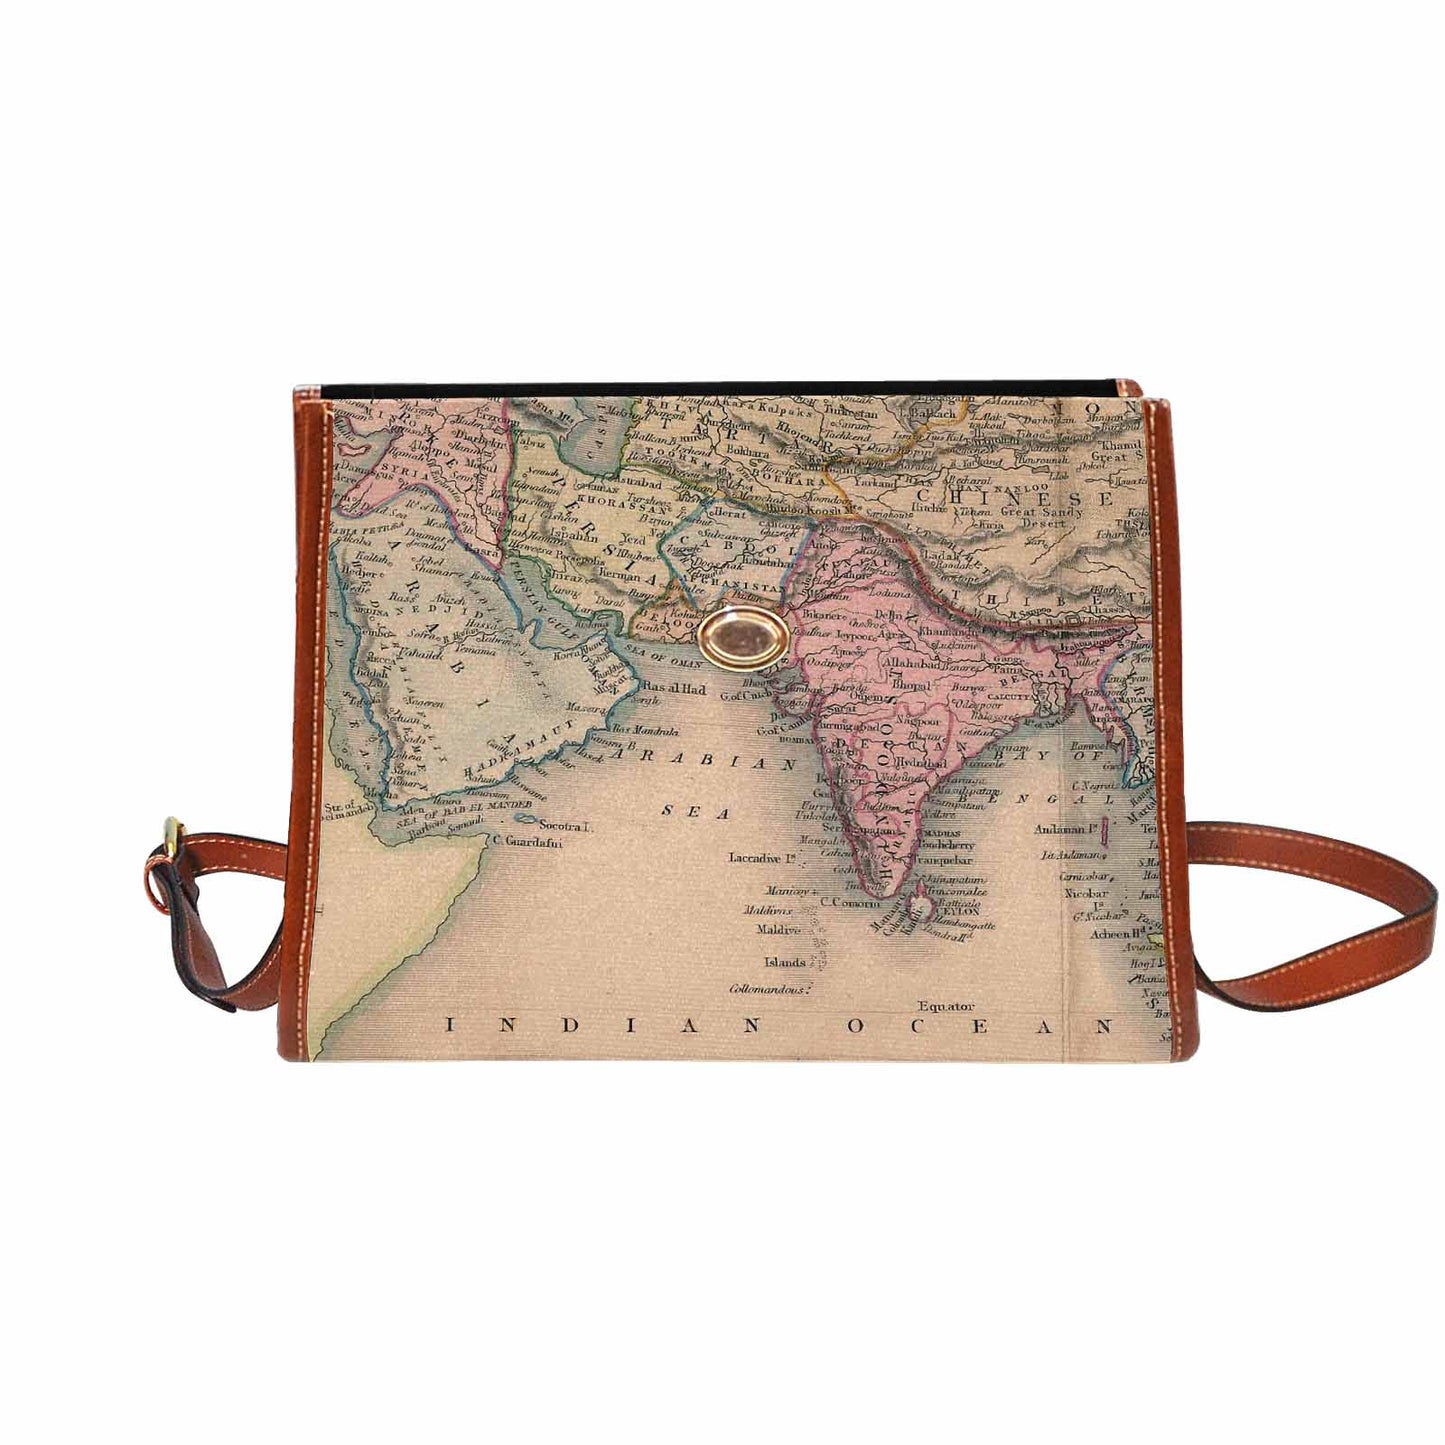 Antique Map Handbag, Model 1695341, Design 37